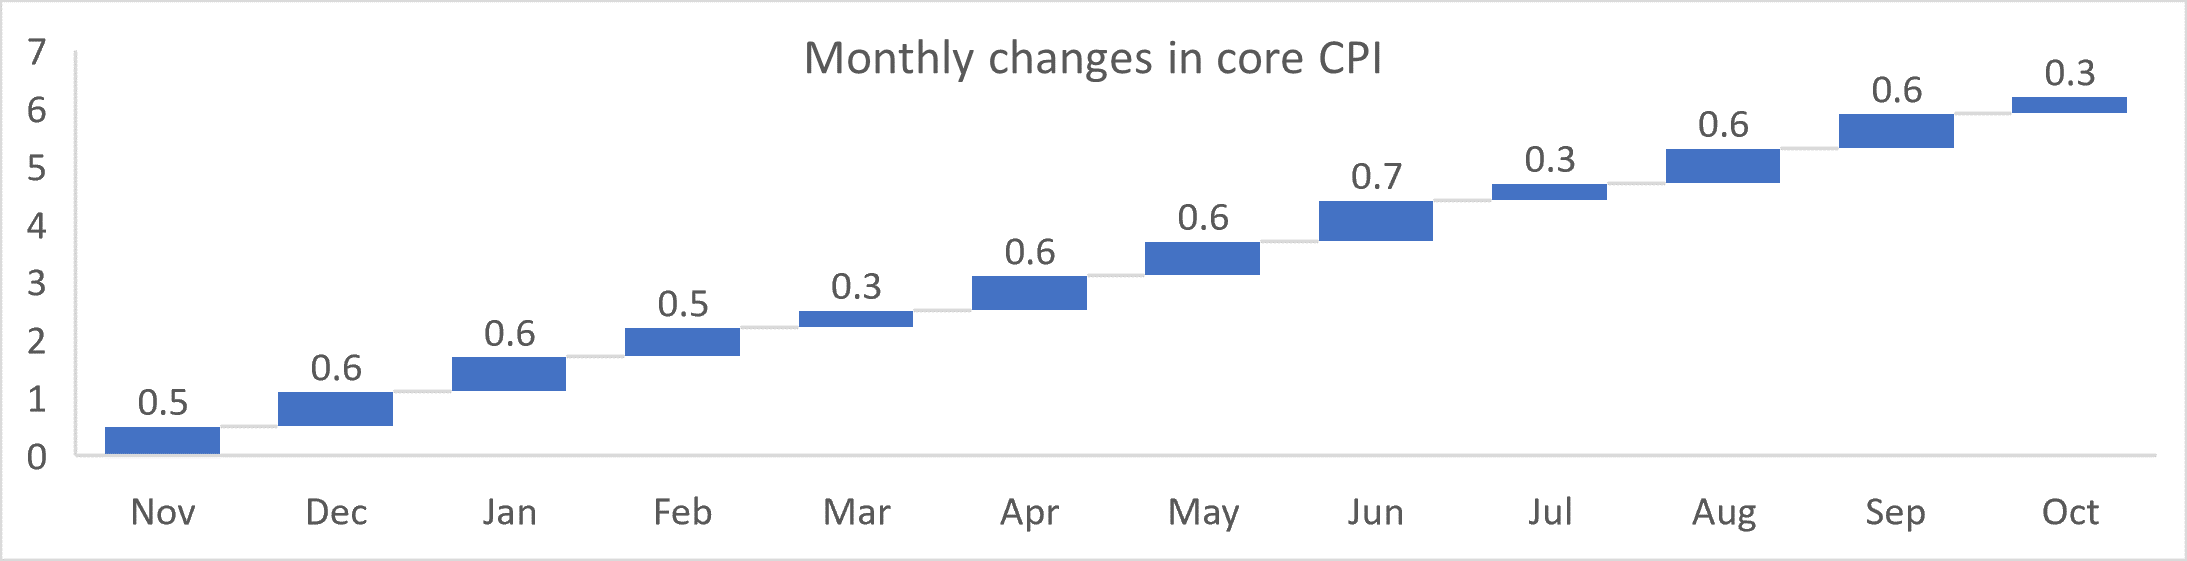 Core CPI monthly change: (Source: Macroscope)